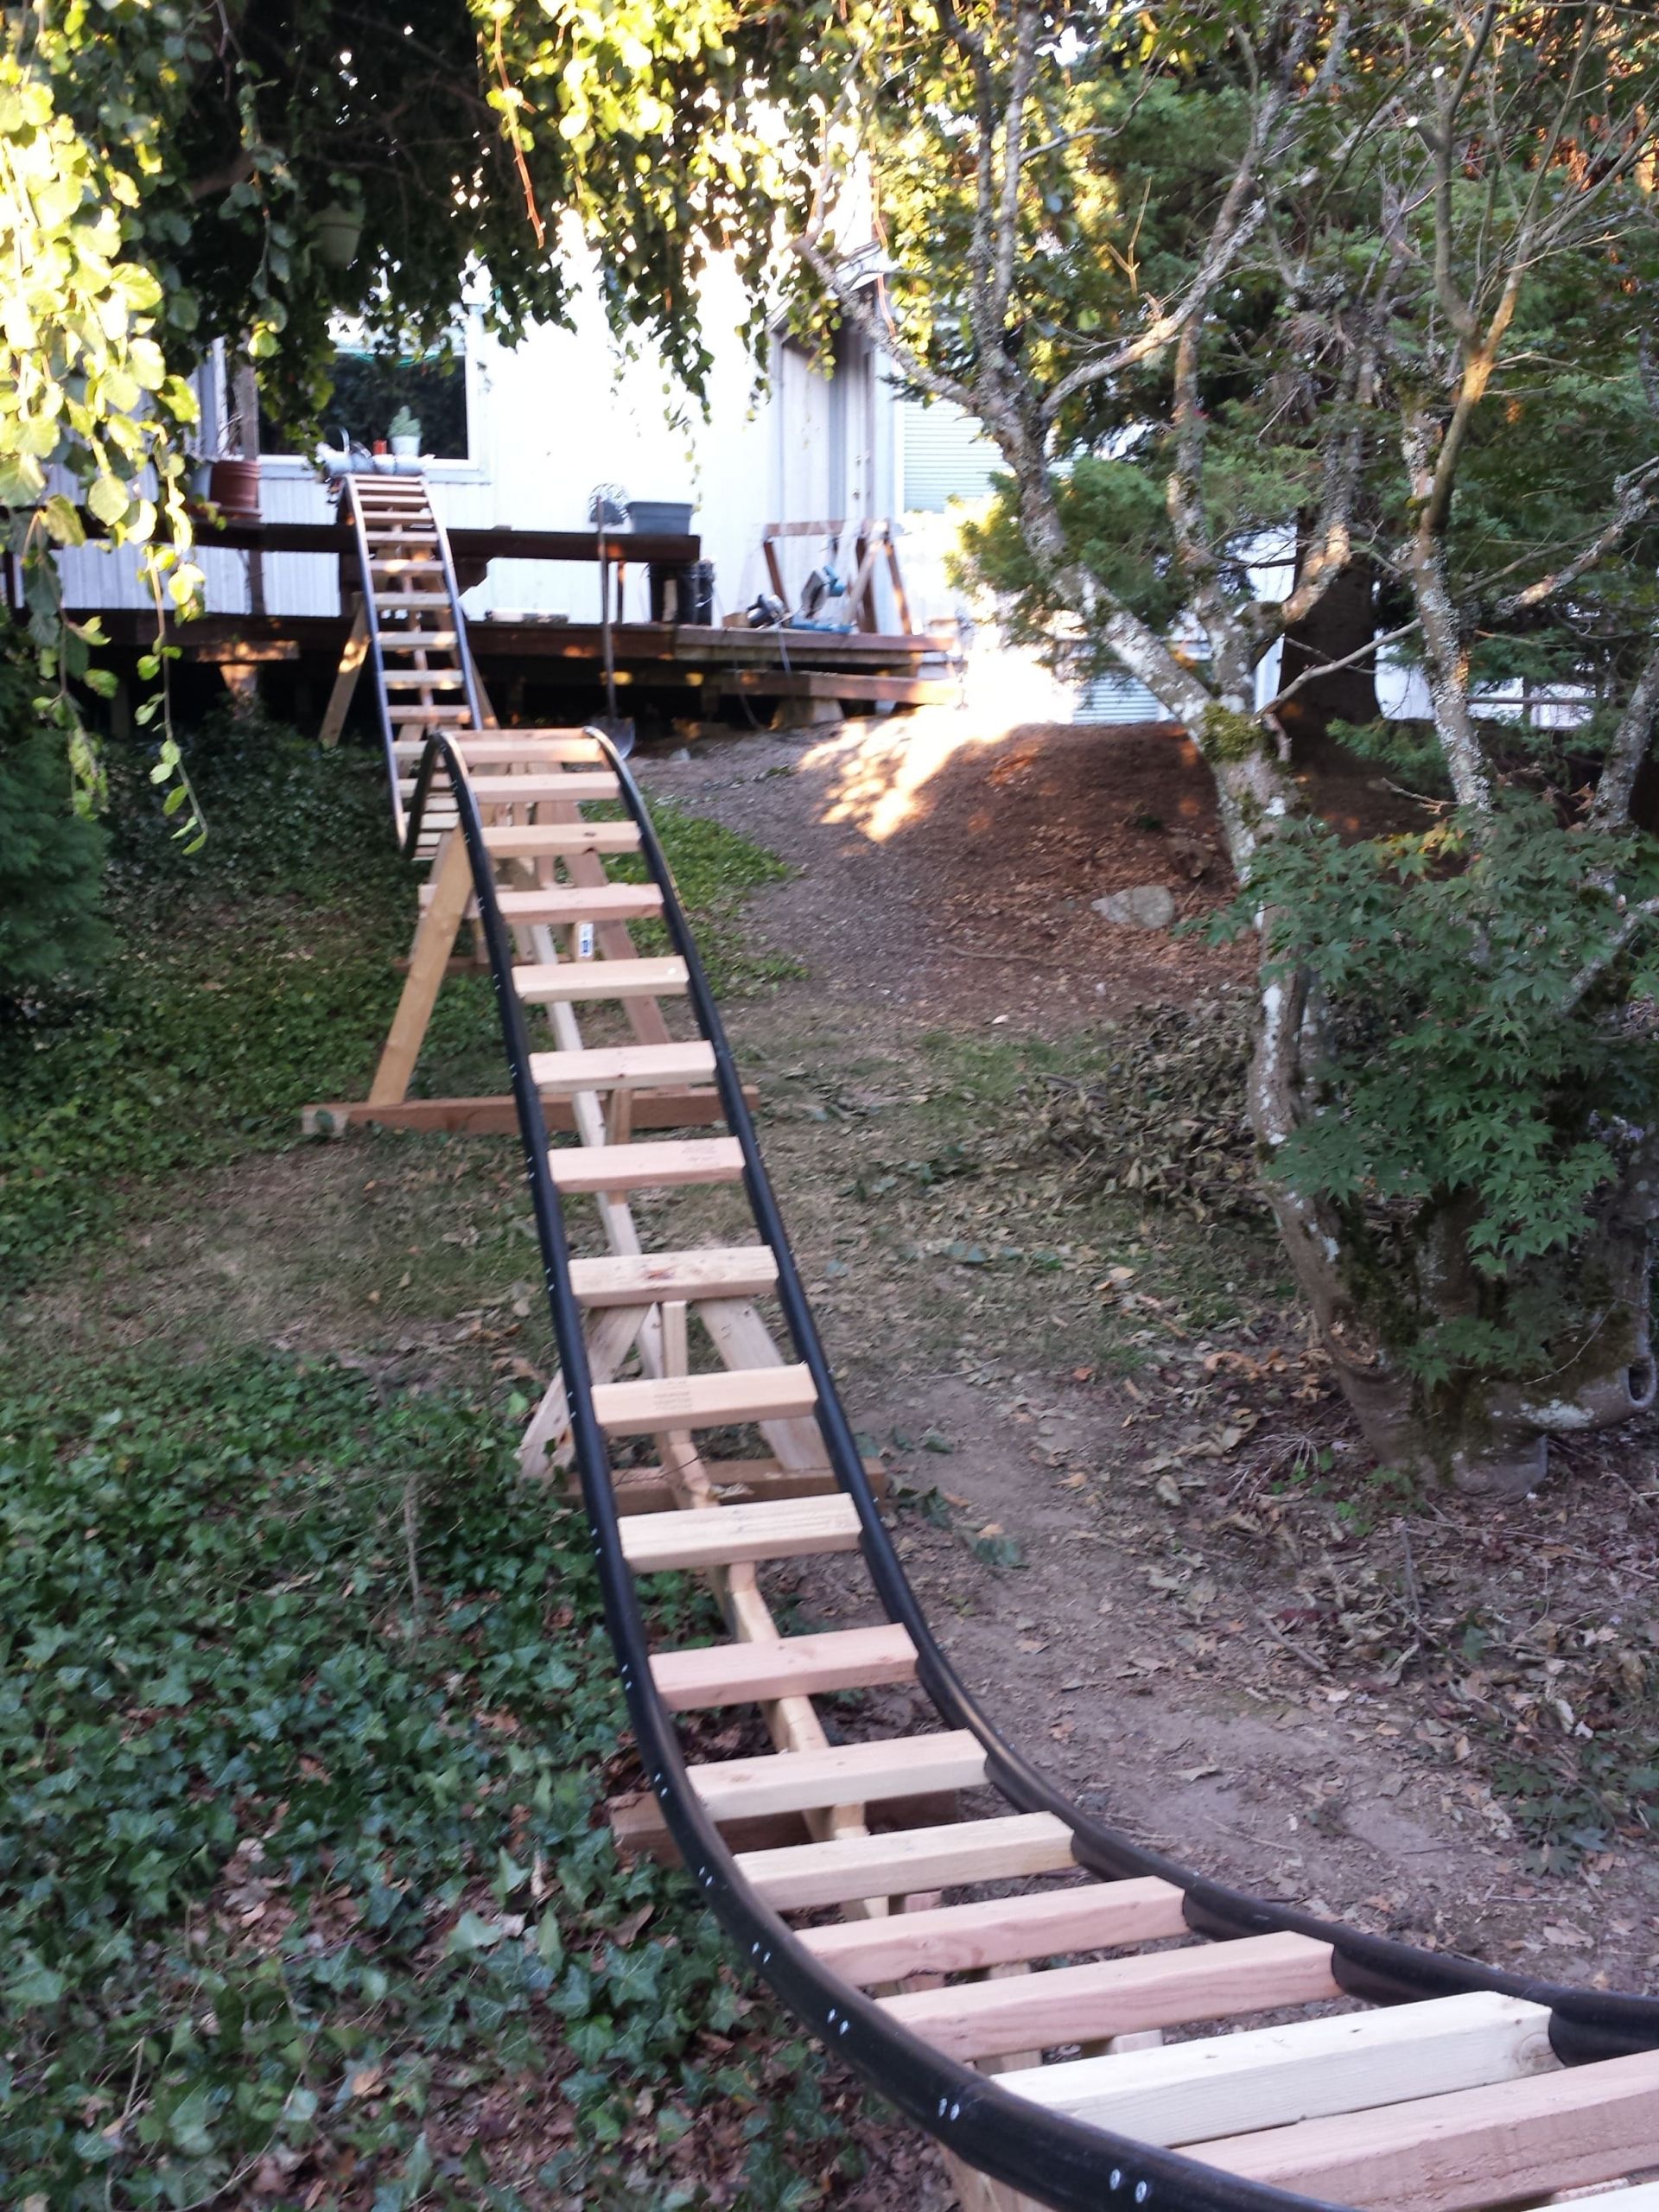 Roller Coaster In Backyard
 Retired Aerospace Engineer Builds a Backyard Roller